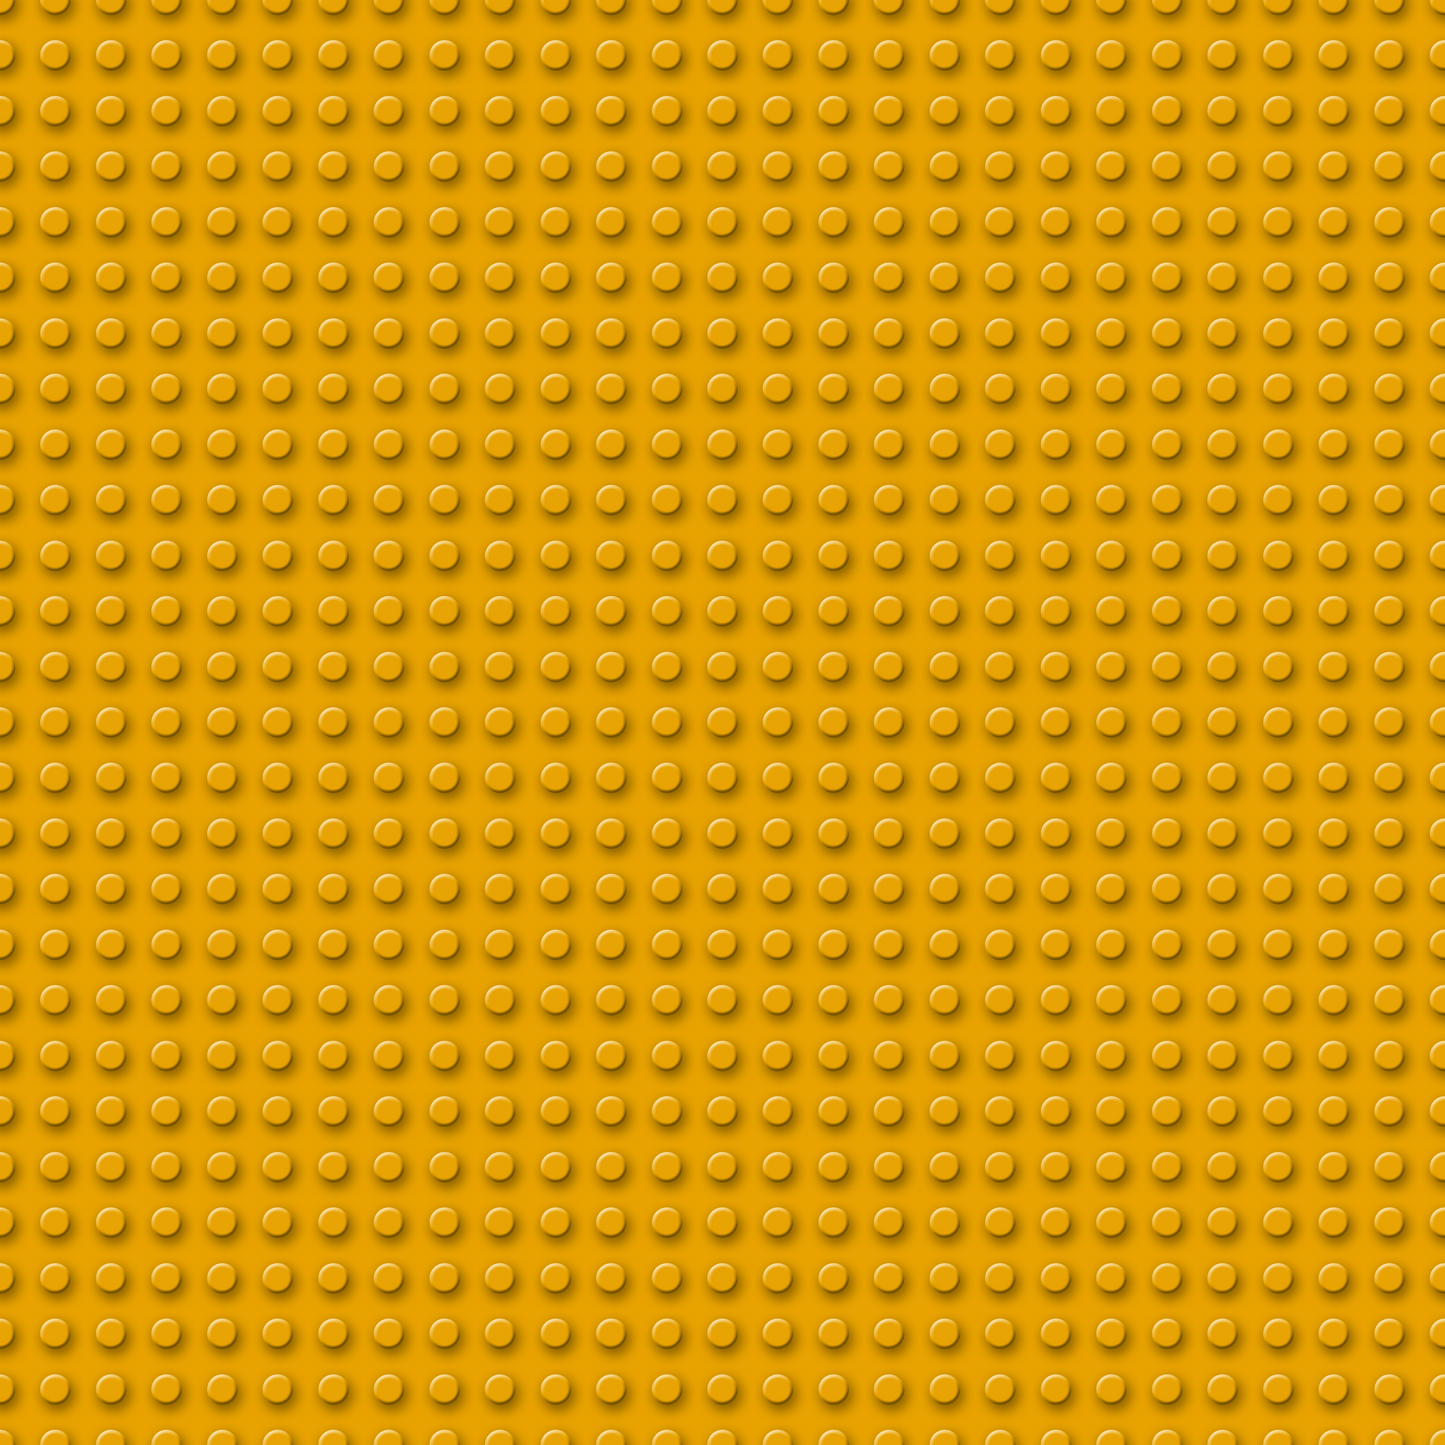 Building Blocks - Dark Yellow - 068